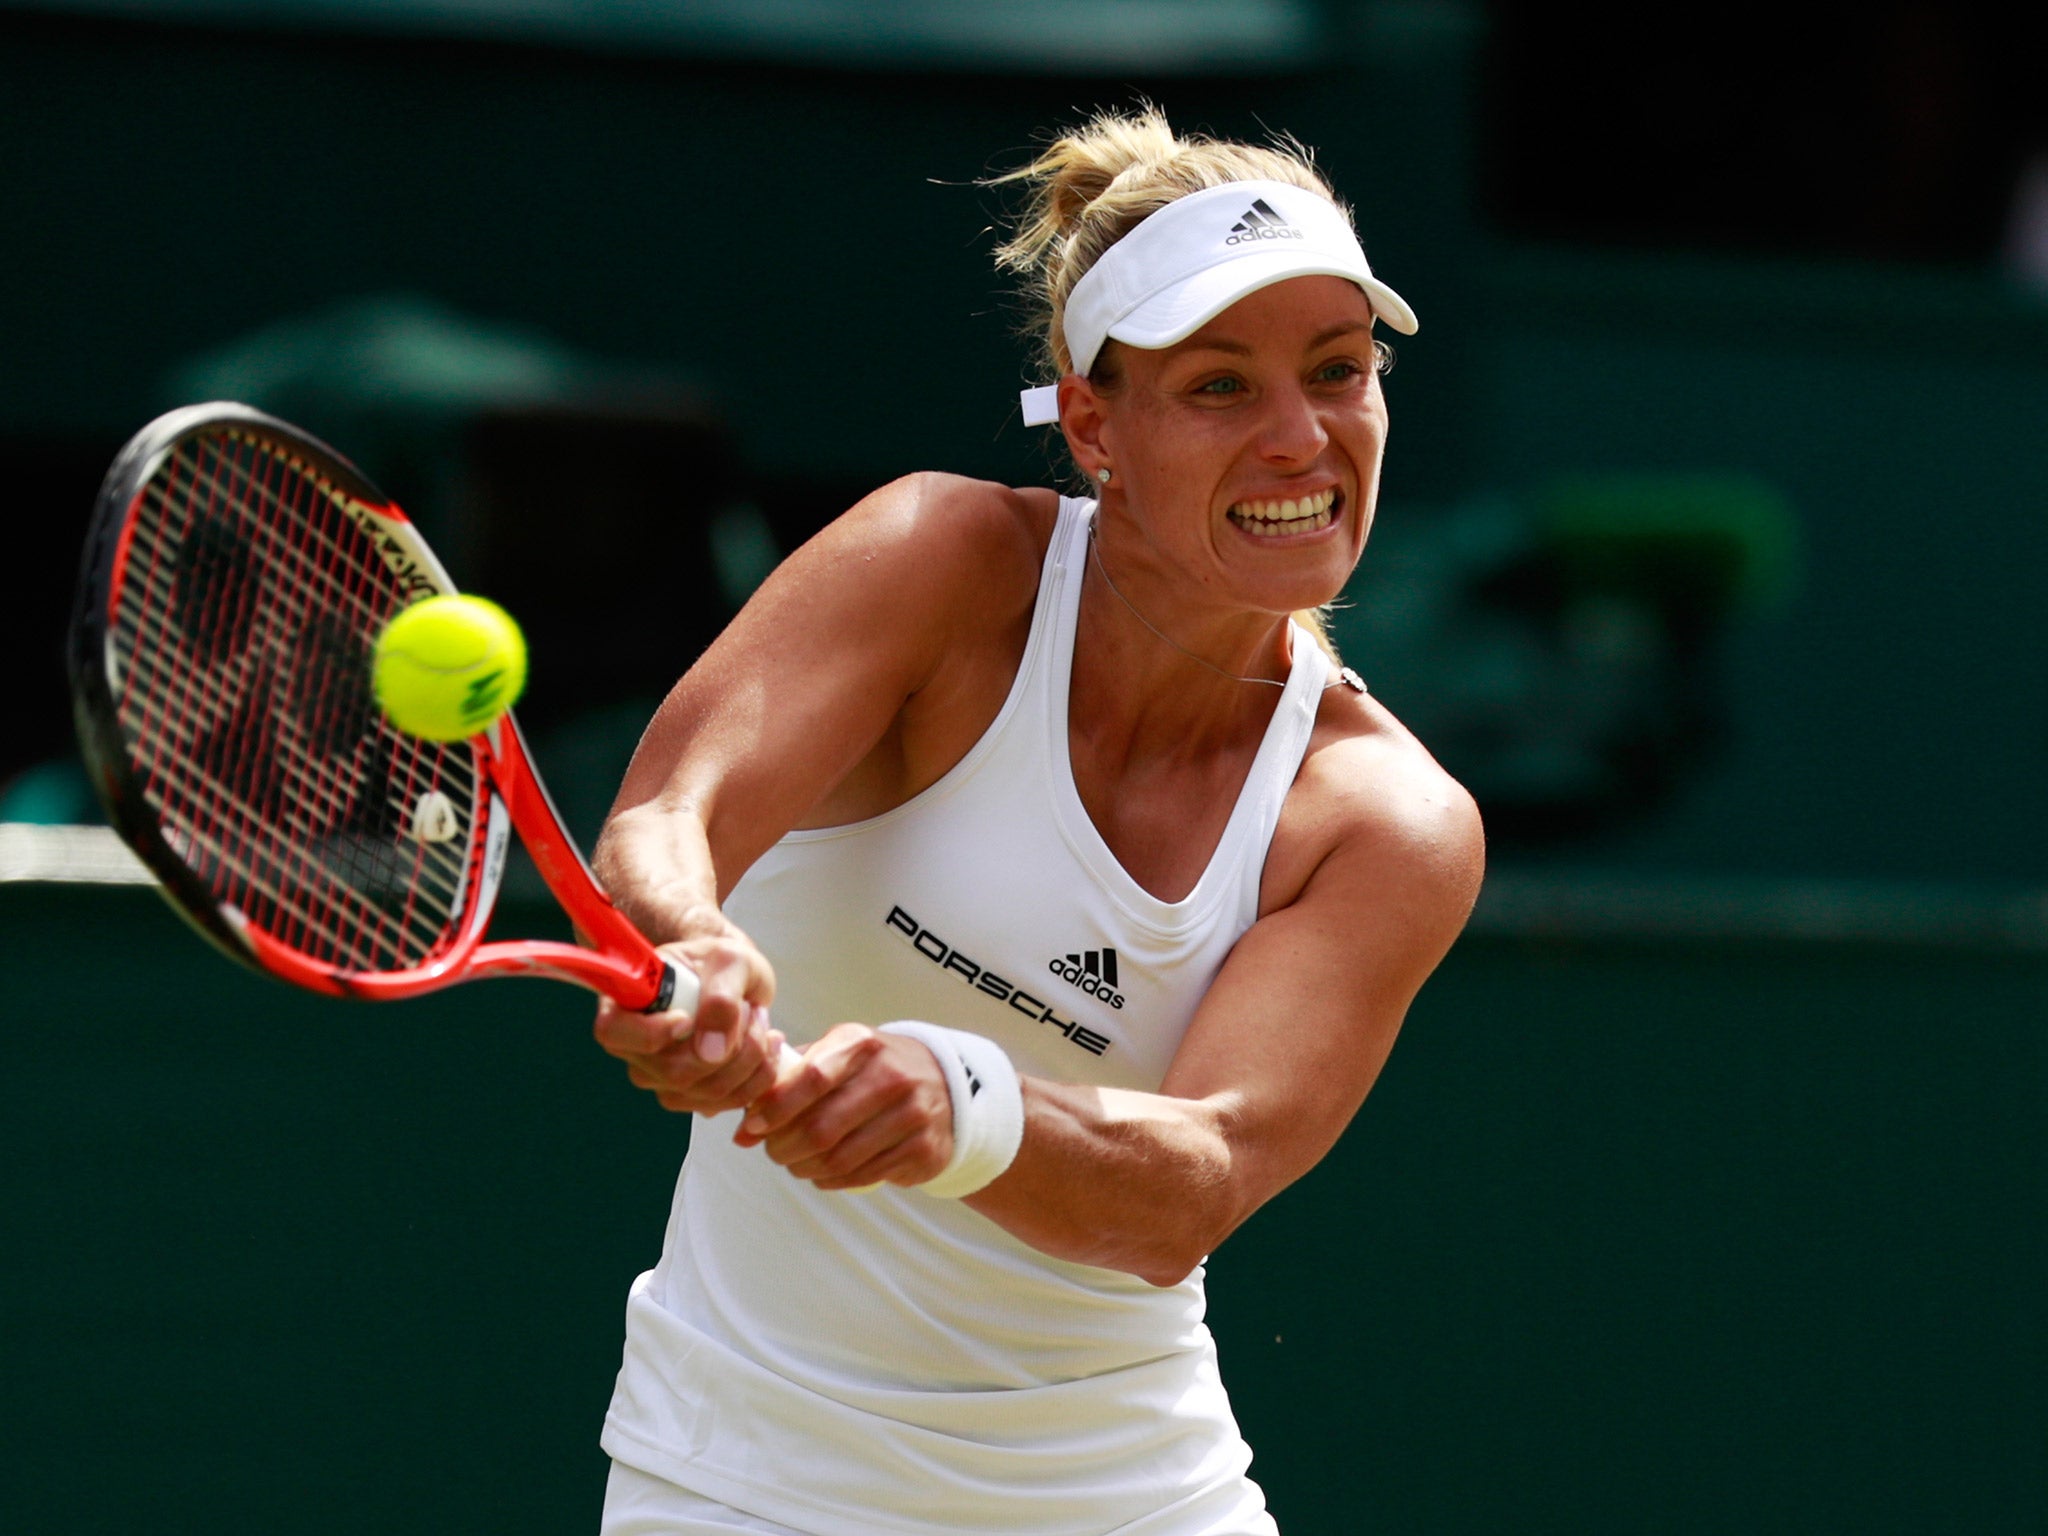 Angelique Kerber beat Venus Williams 6-4, 6-4 to reach the Wimbledon final